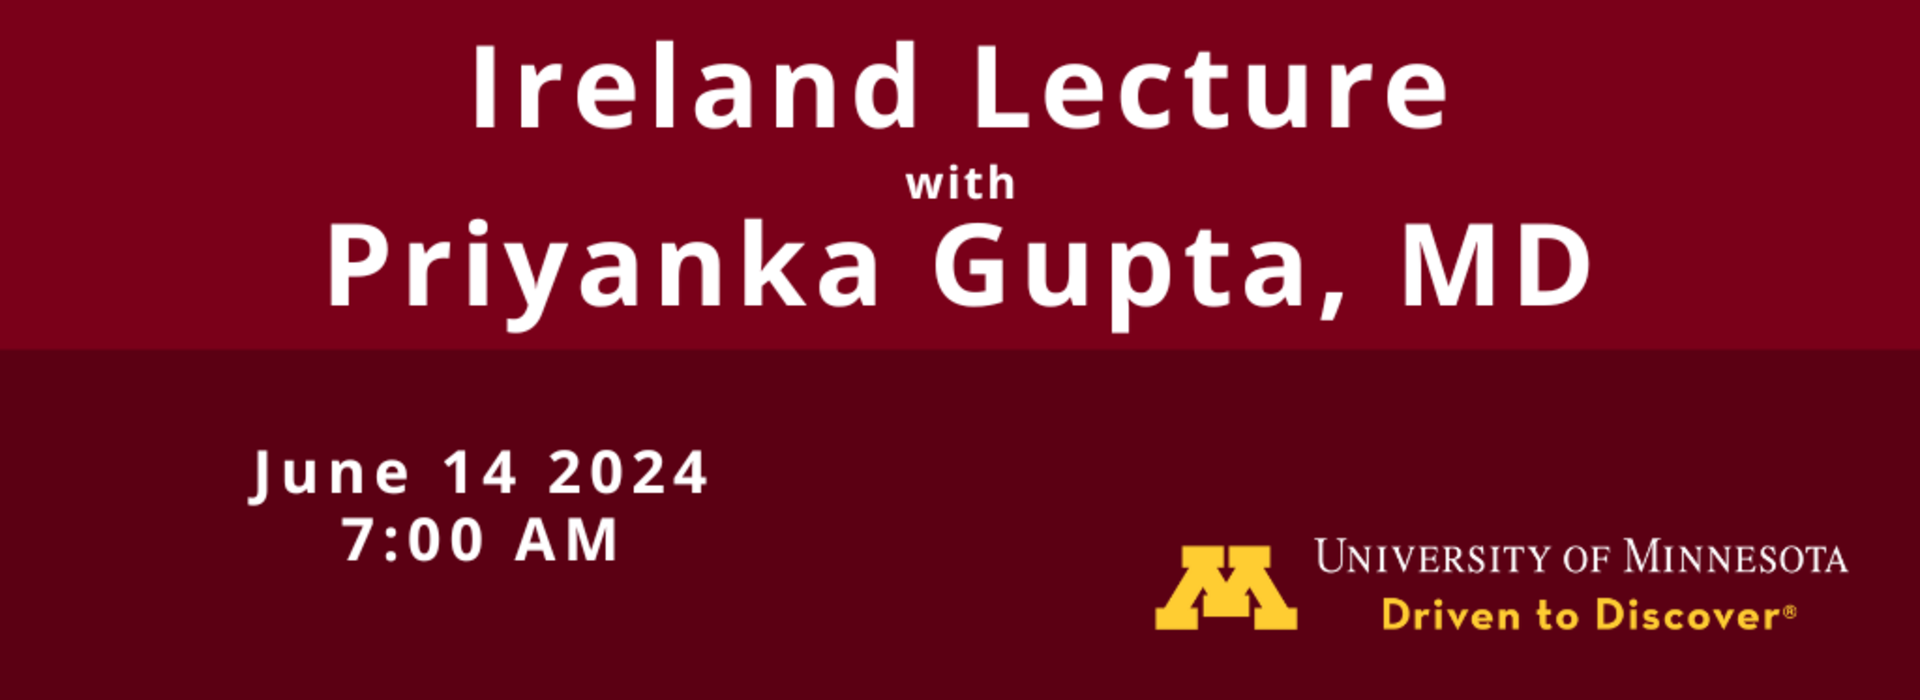 Ireland Lecture with Priyanka Gupta, MD